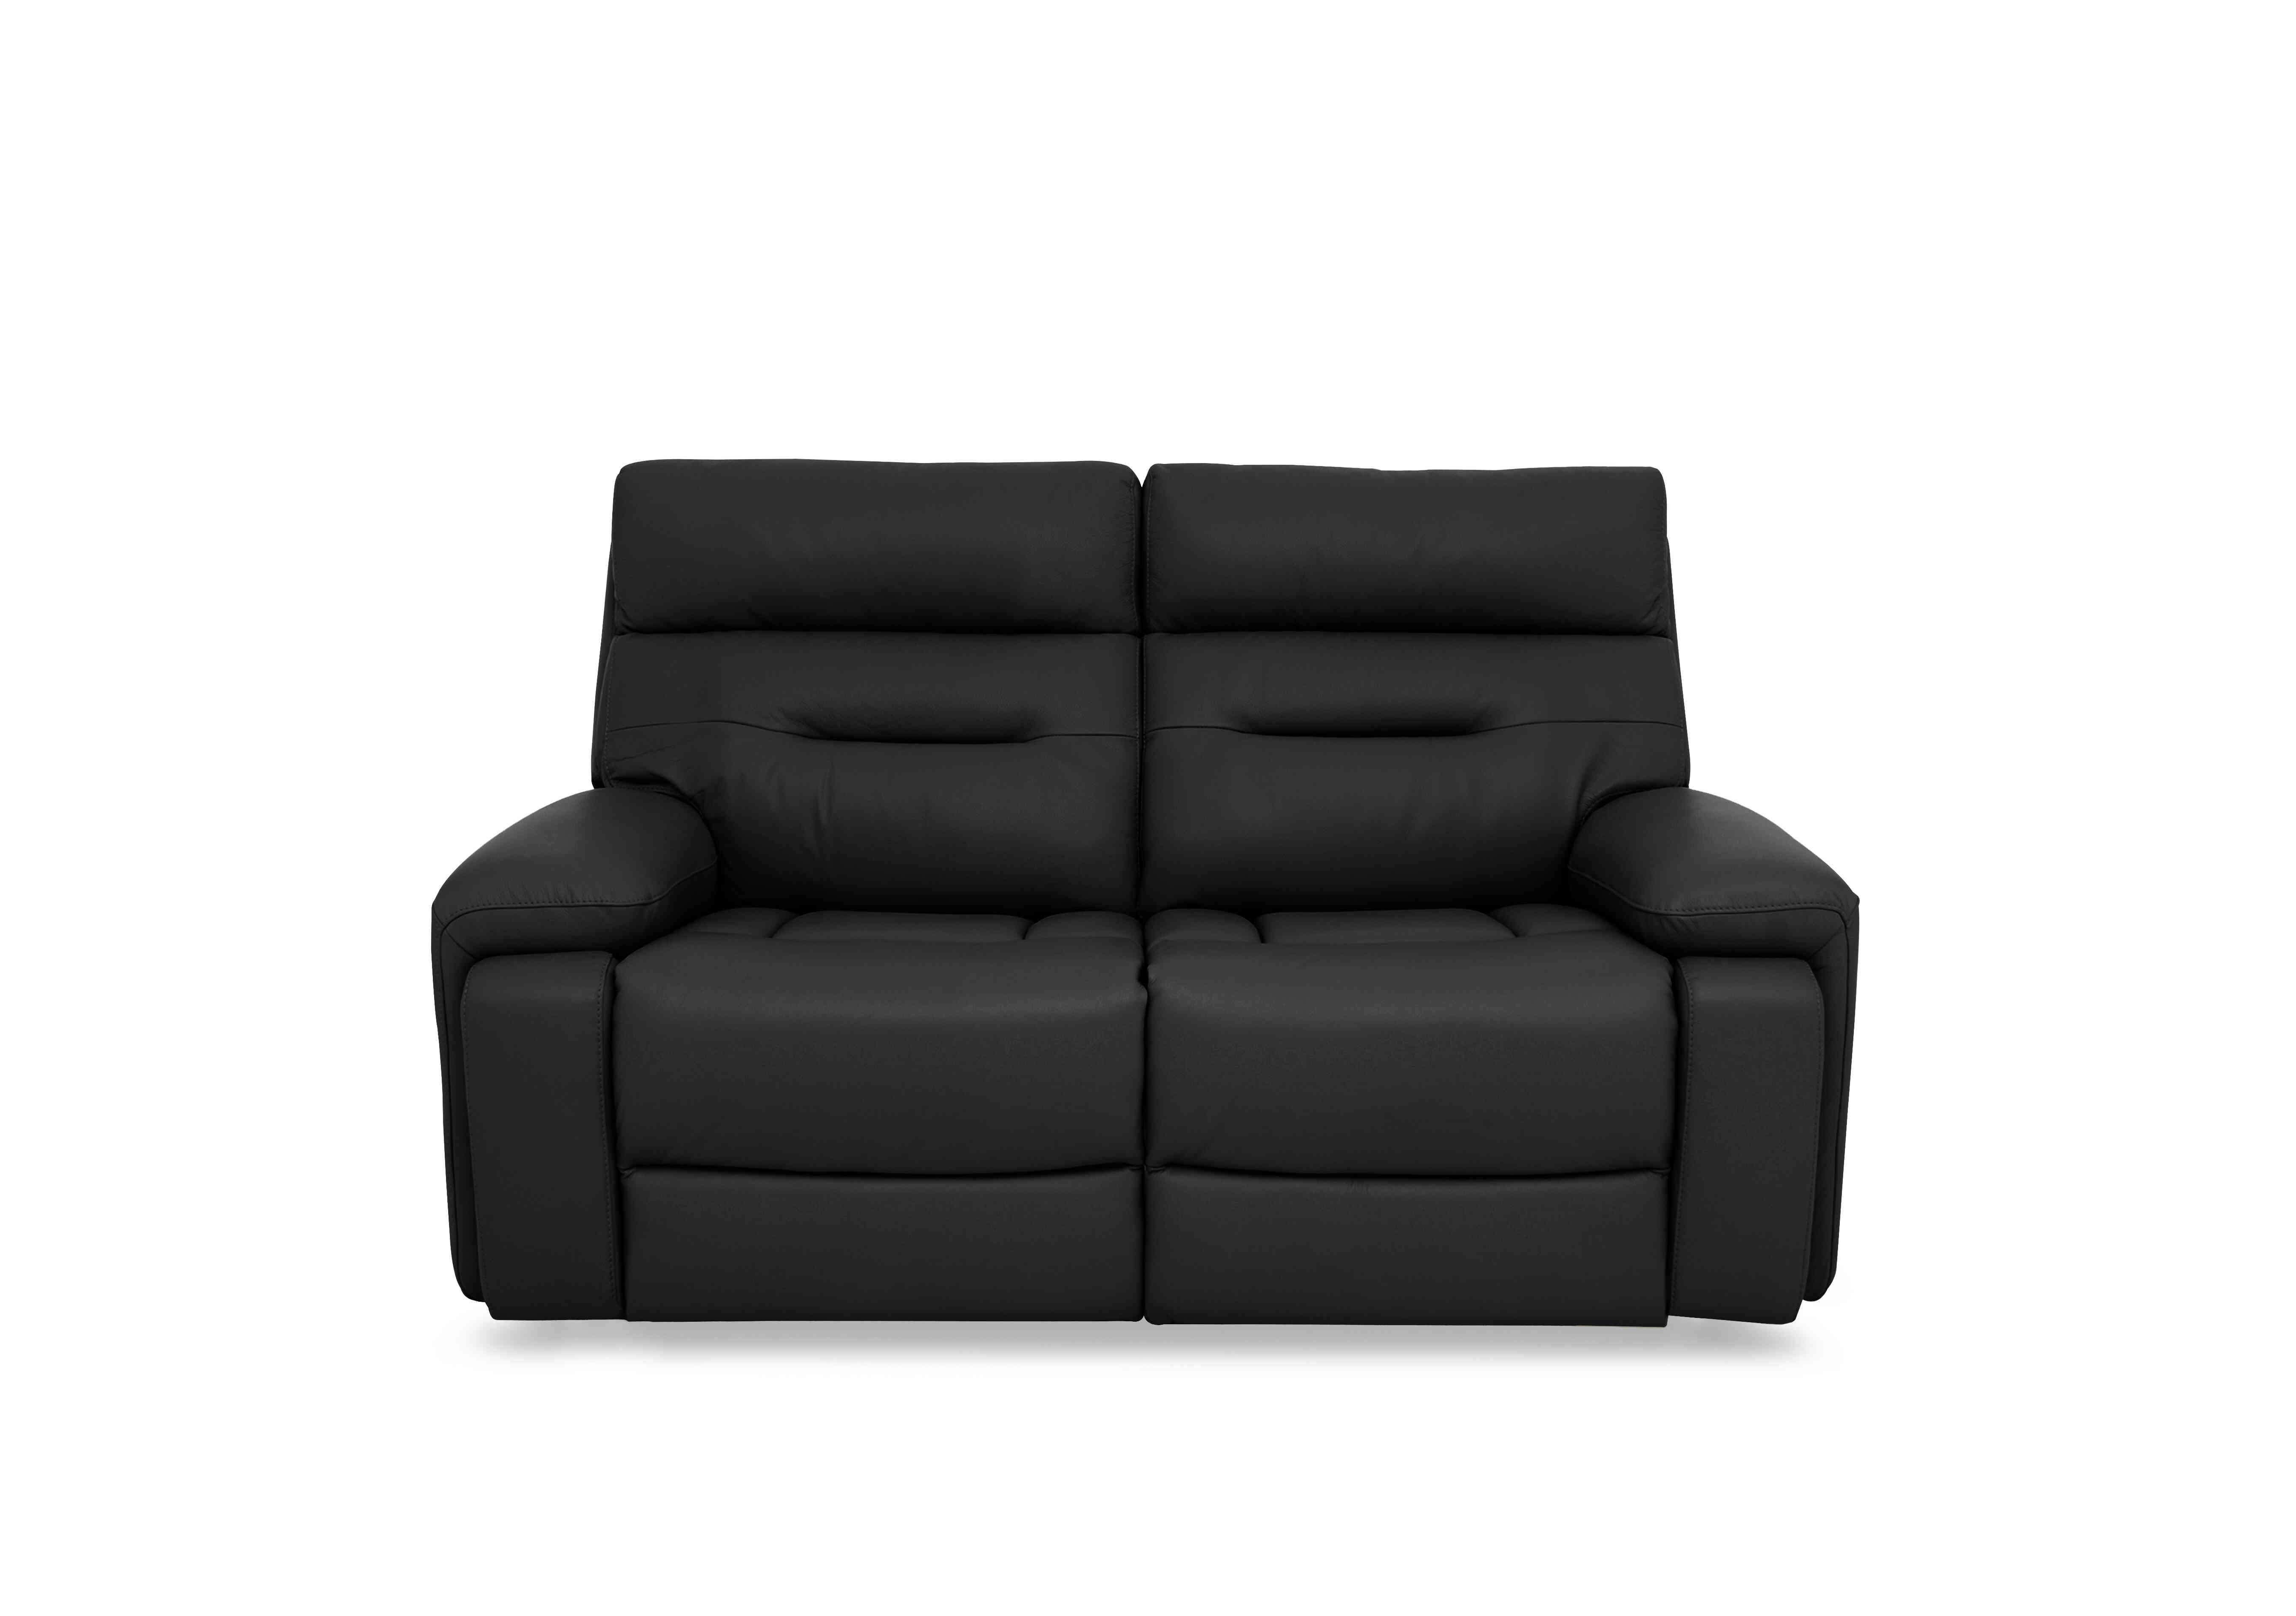 Cinemax 2 Seater Leather Sofa in La4820 Natural Black Mica on Furniture Village